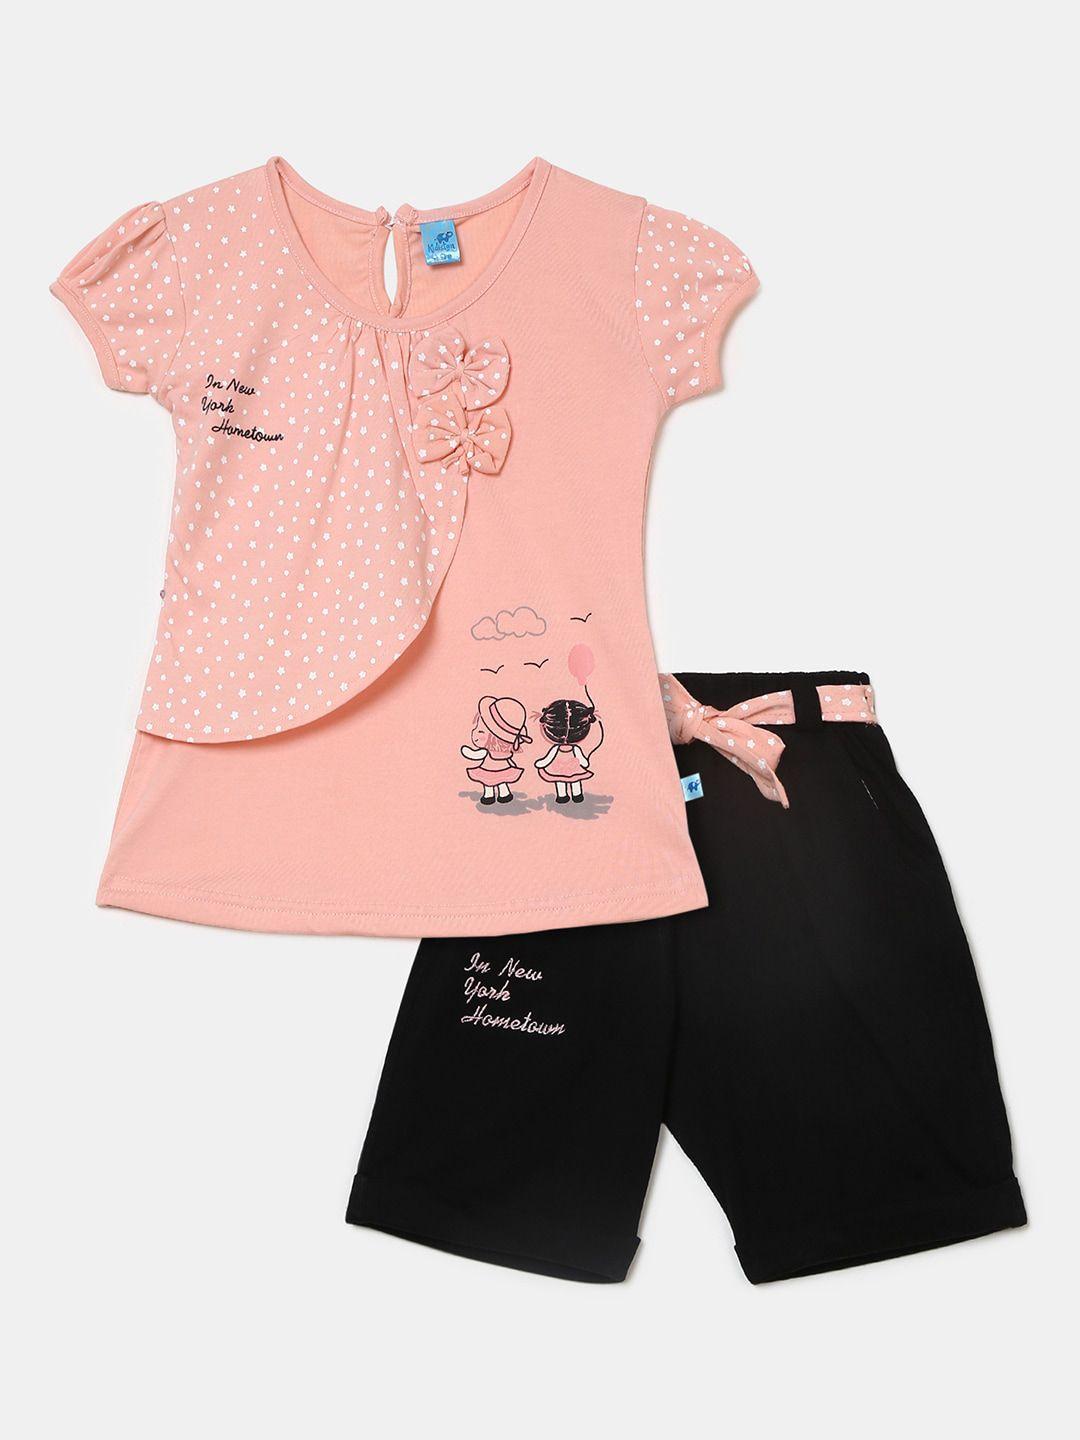 v-mart unisex kids peach-coloured & black printed t-shirt with shorts